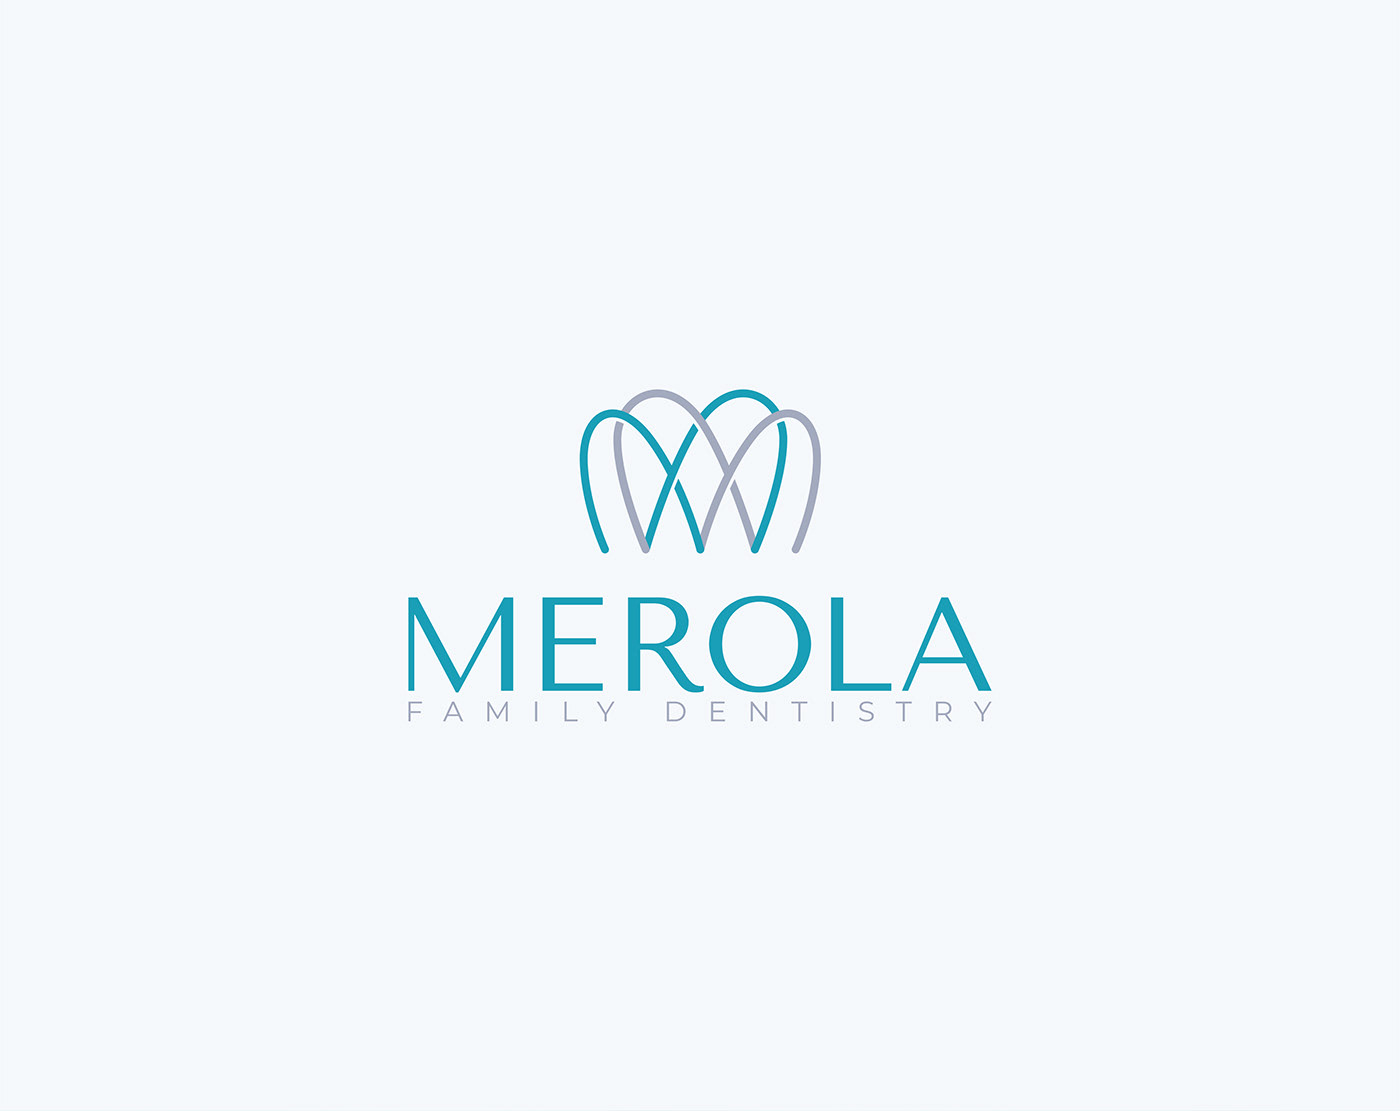 Merola Family Dentistry Monogram Logo - Letter M Logo Design - Brand Identity